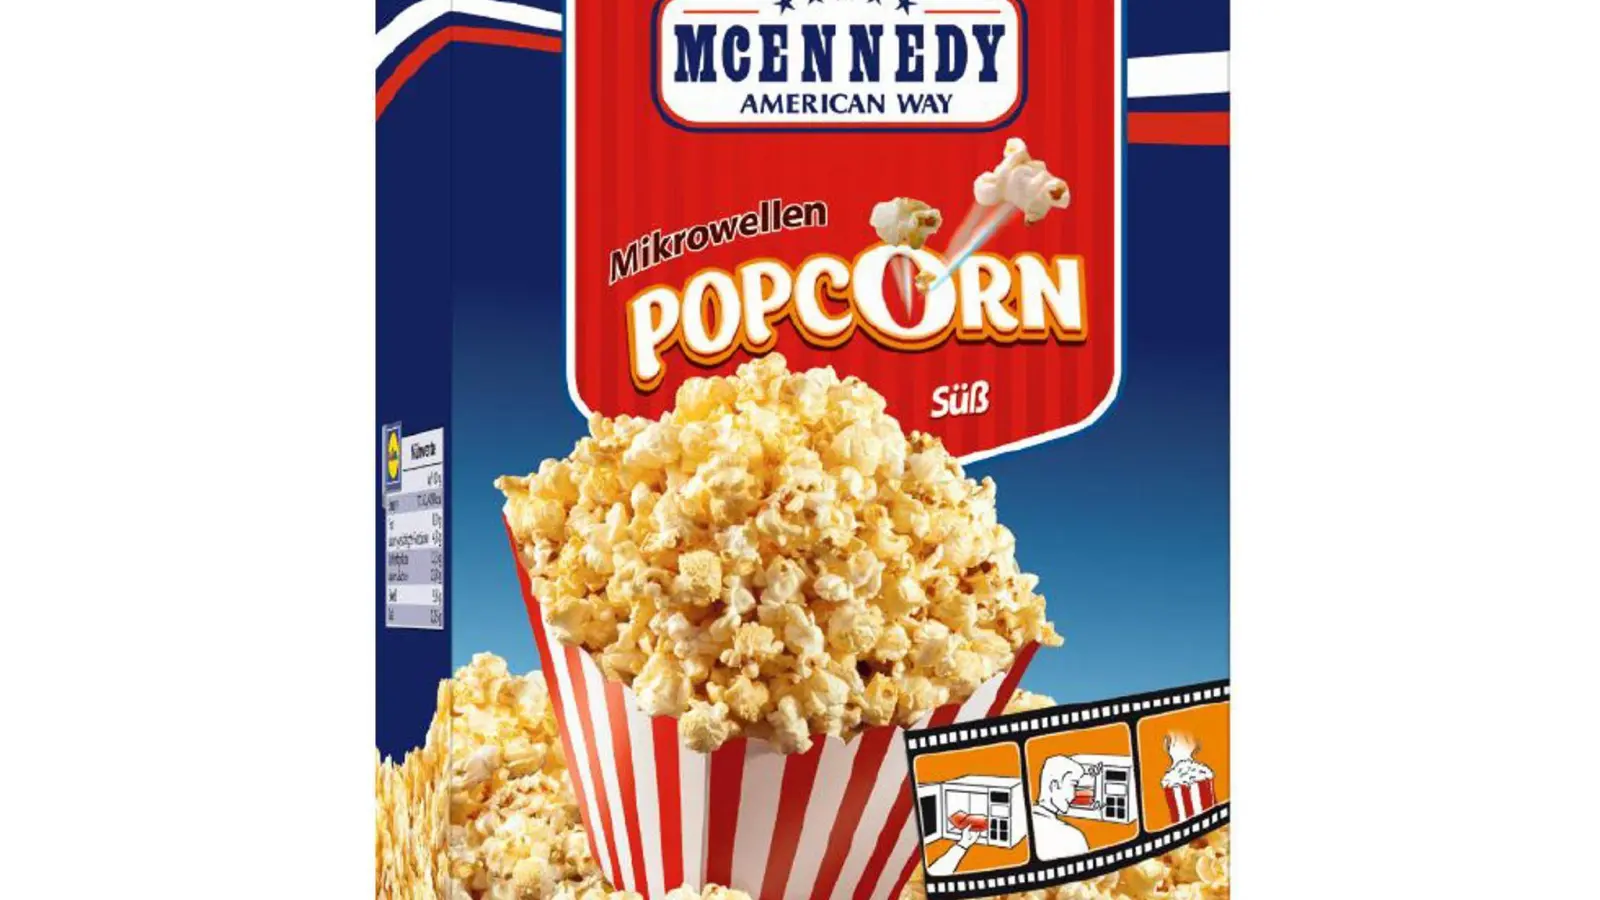 Lidl ruft mehrere Chargen Popcorn wegen zu hohem Pestizid-Gehalts zurück. Die Erstattung ist auch ohne Kassenbon in allen Filialen möglich. (Foto: lebensmittelwarnung.de/dpa-infocom)